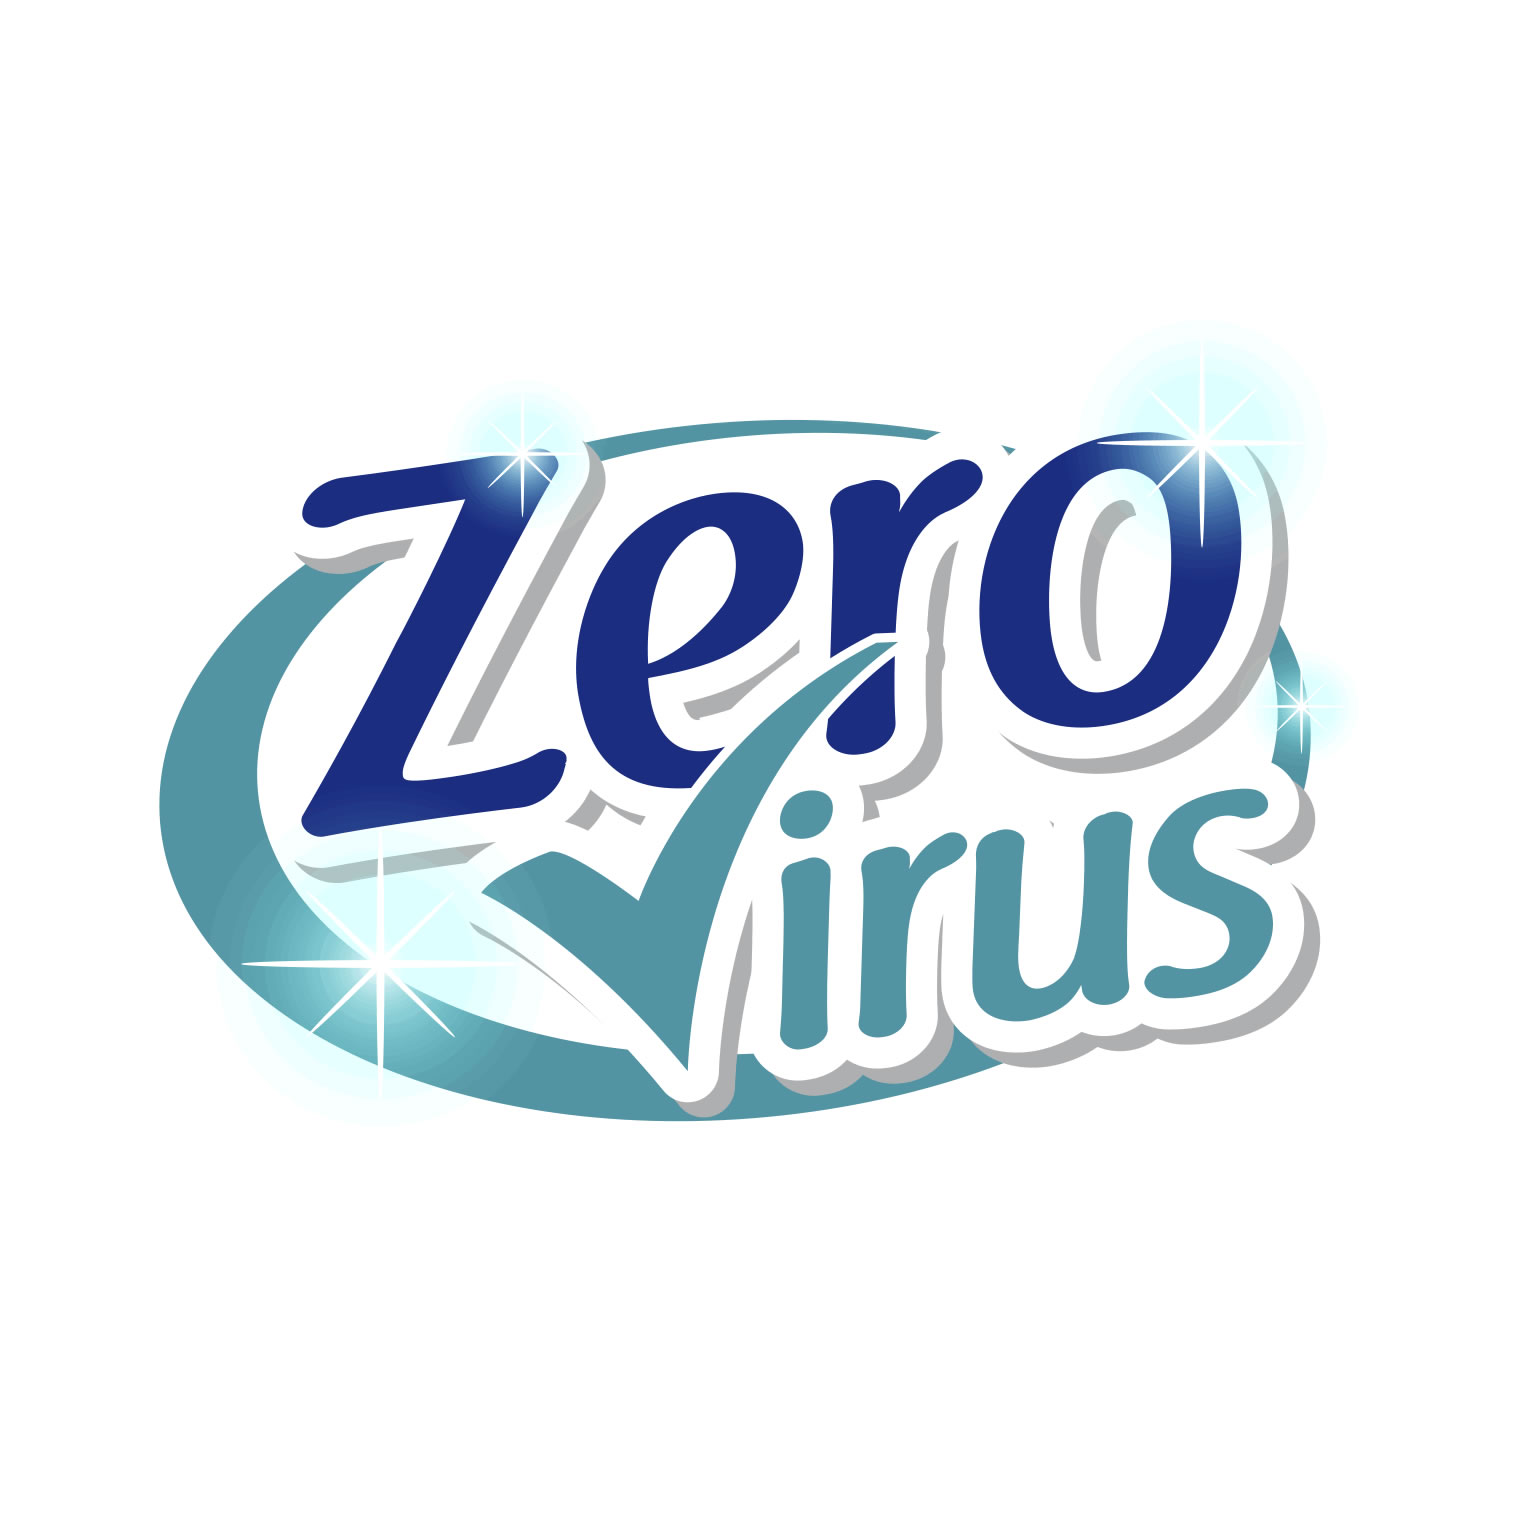 (c) Zerovirus.mx